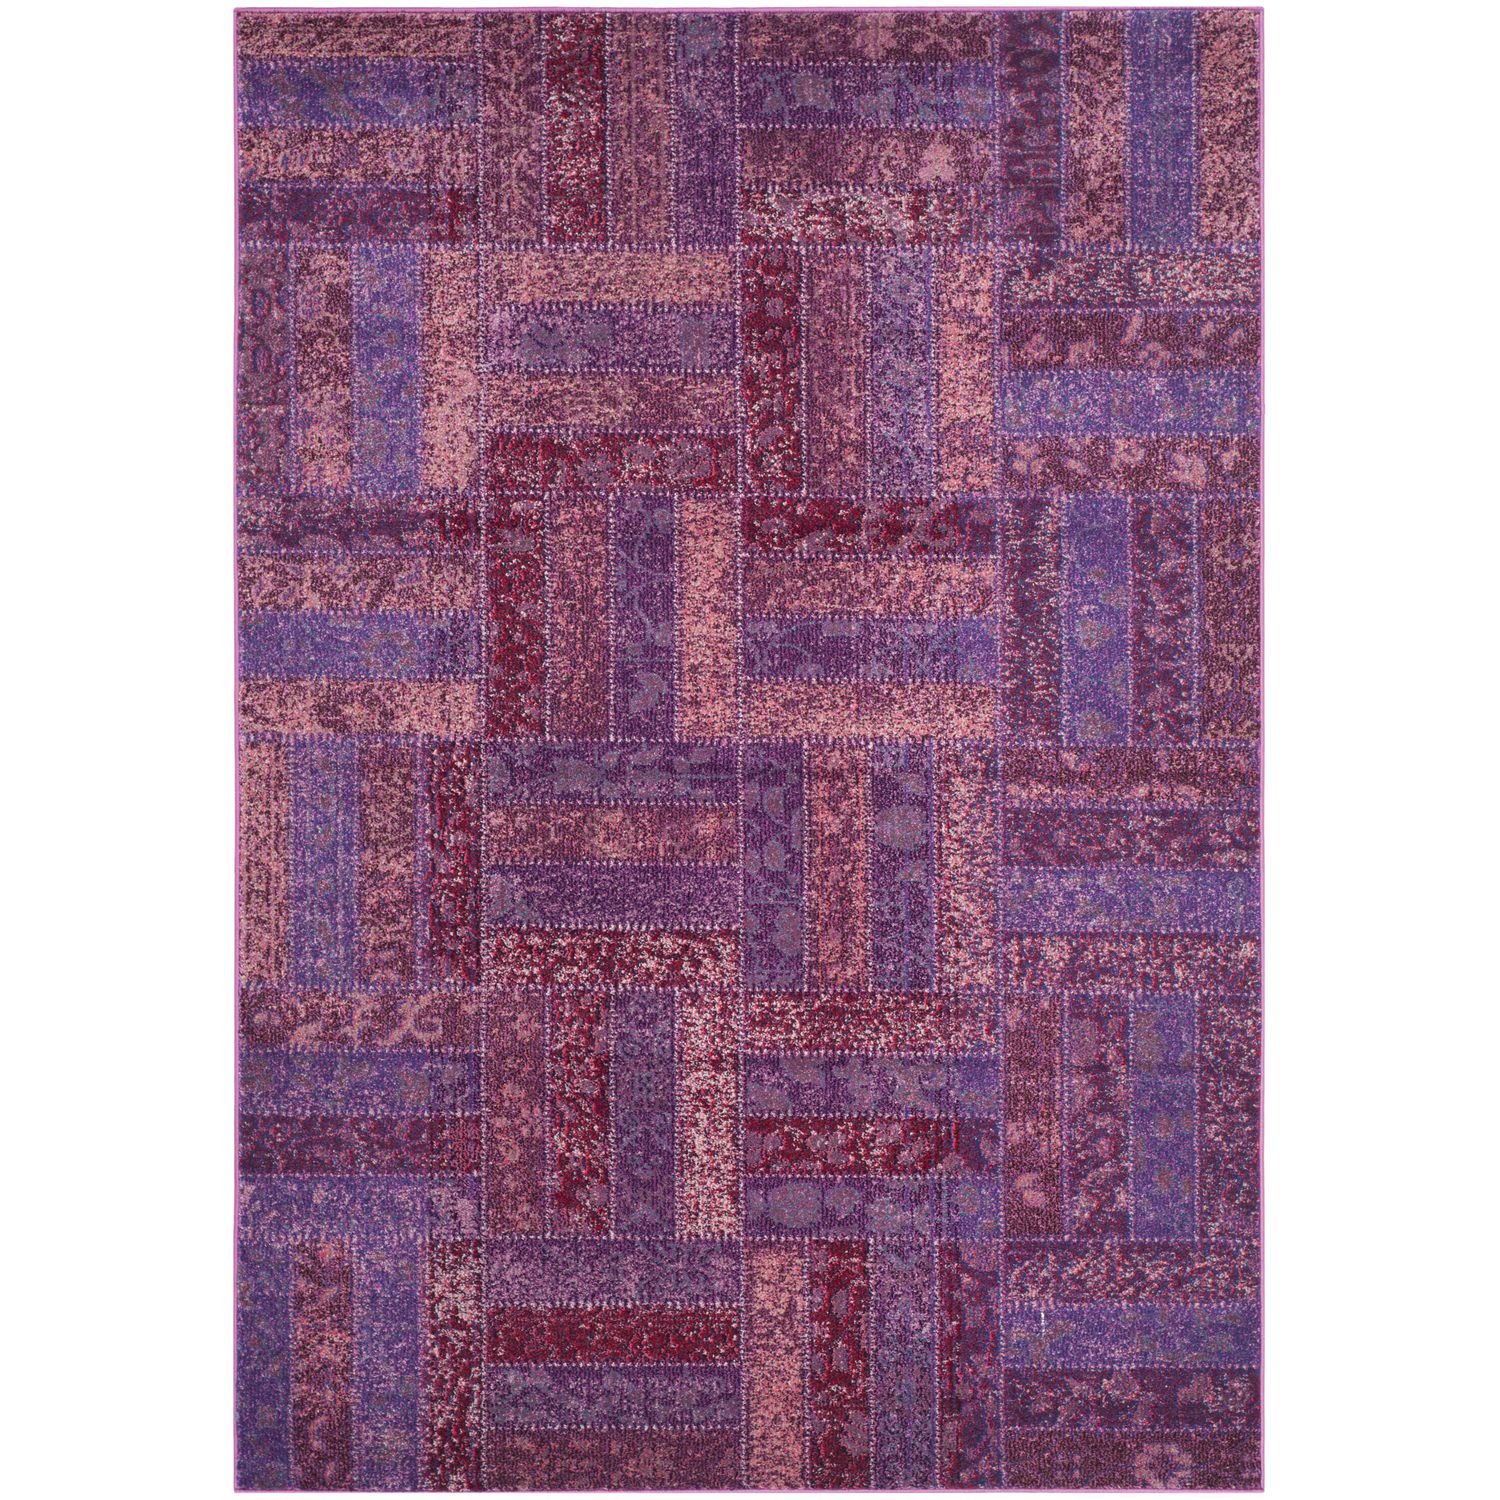 Teppich Cordova - Kunstfaser - Dunkellila / Bordeaux - 154 x 231 cm, Safavieh